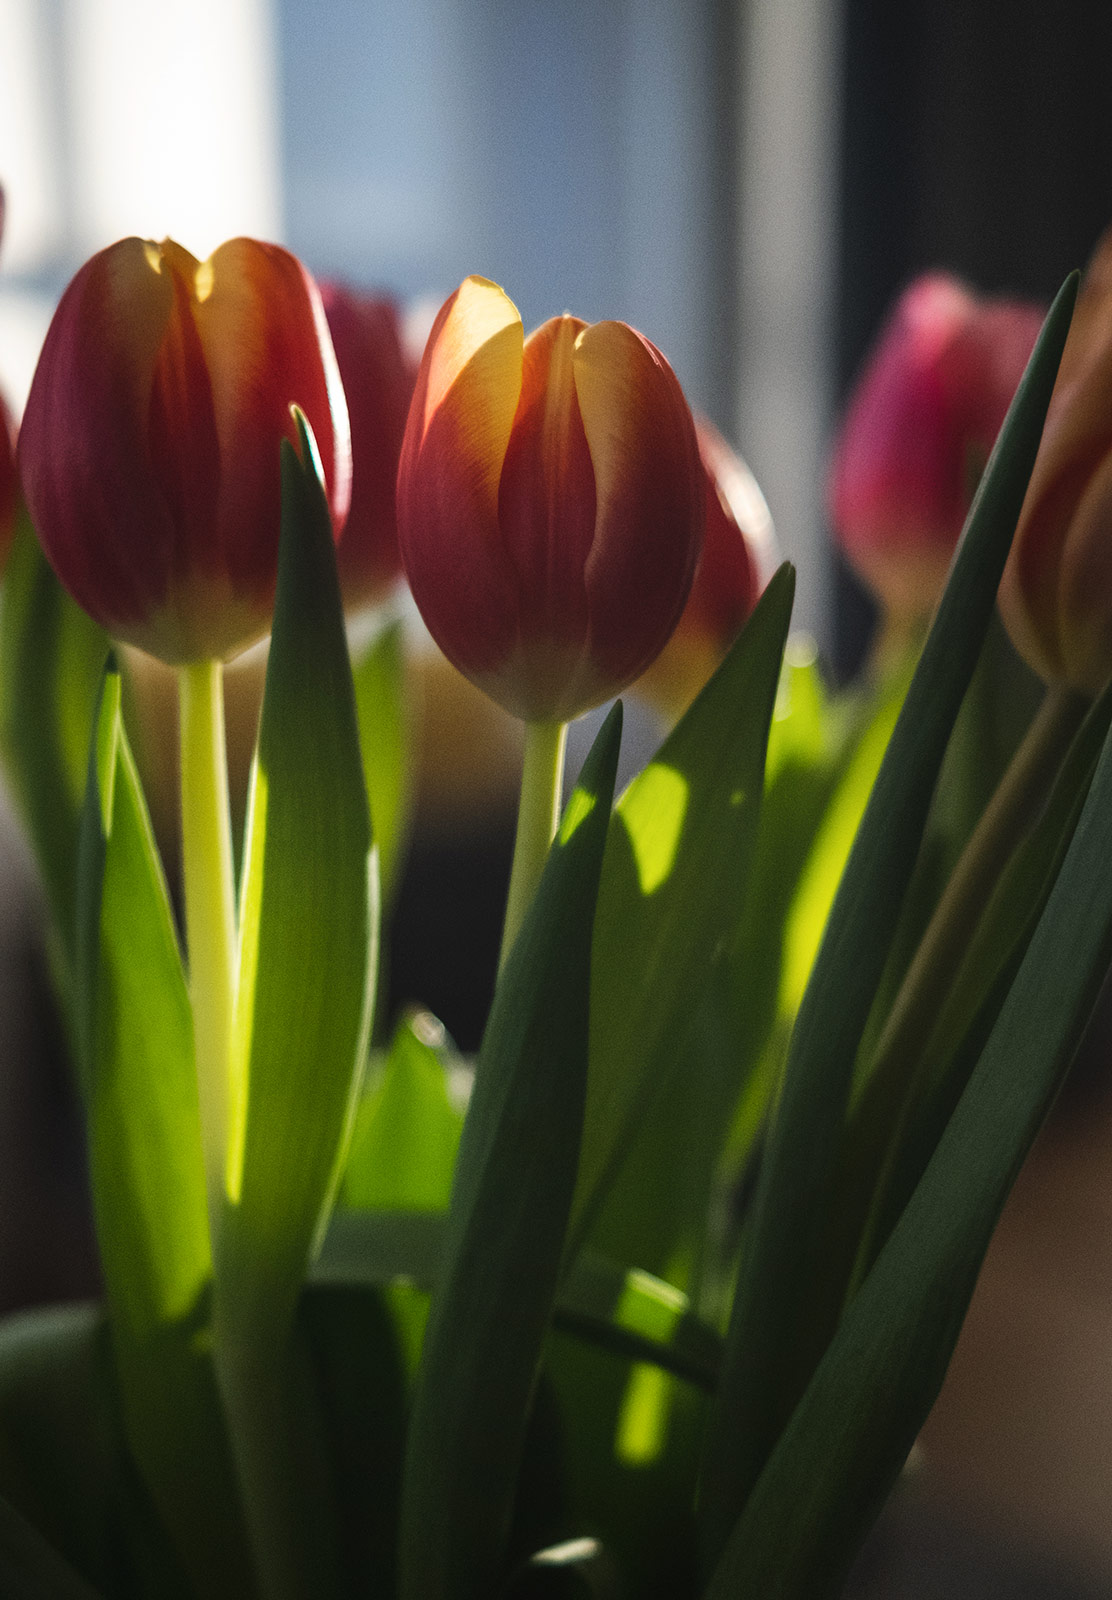 Sun shining on tulips